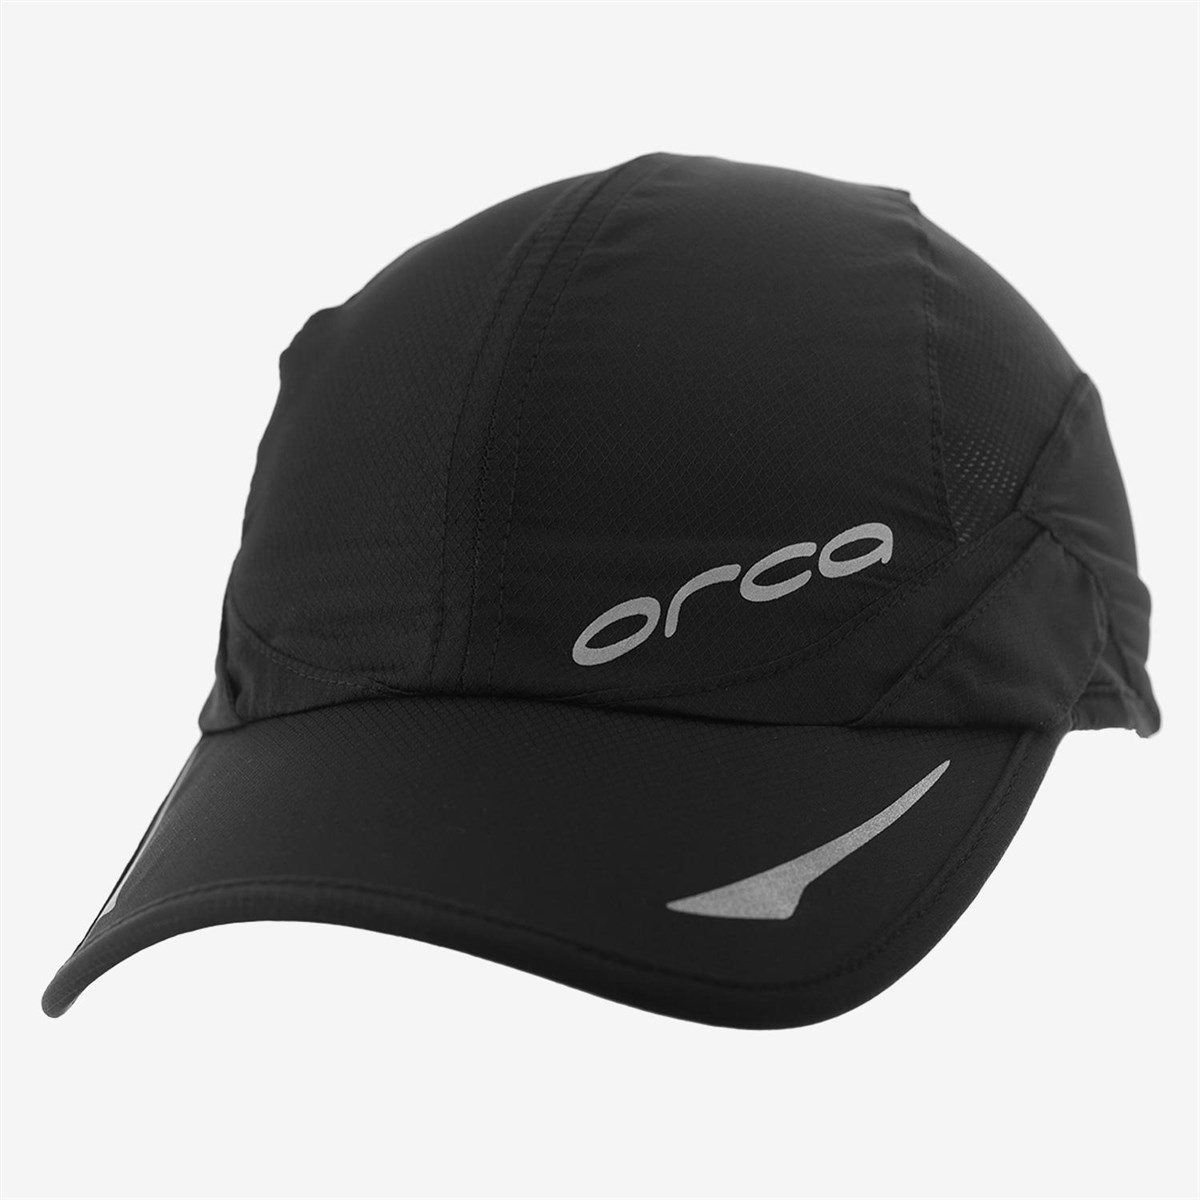 Orca Cap product image